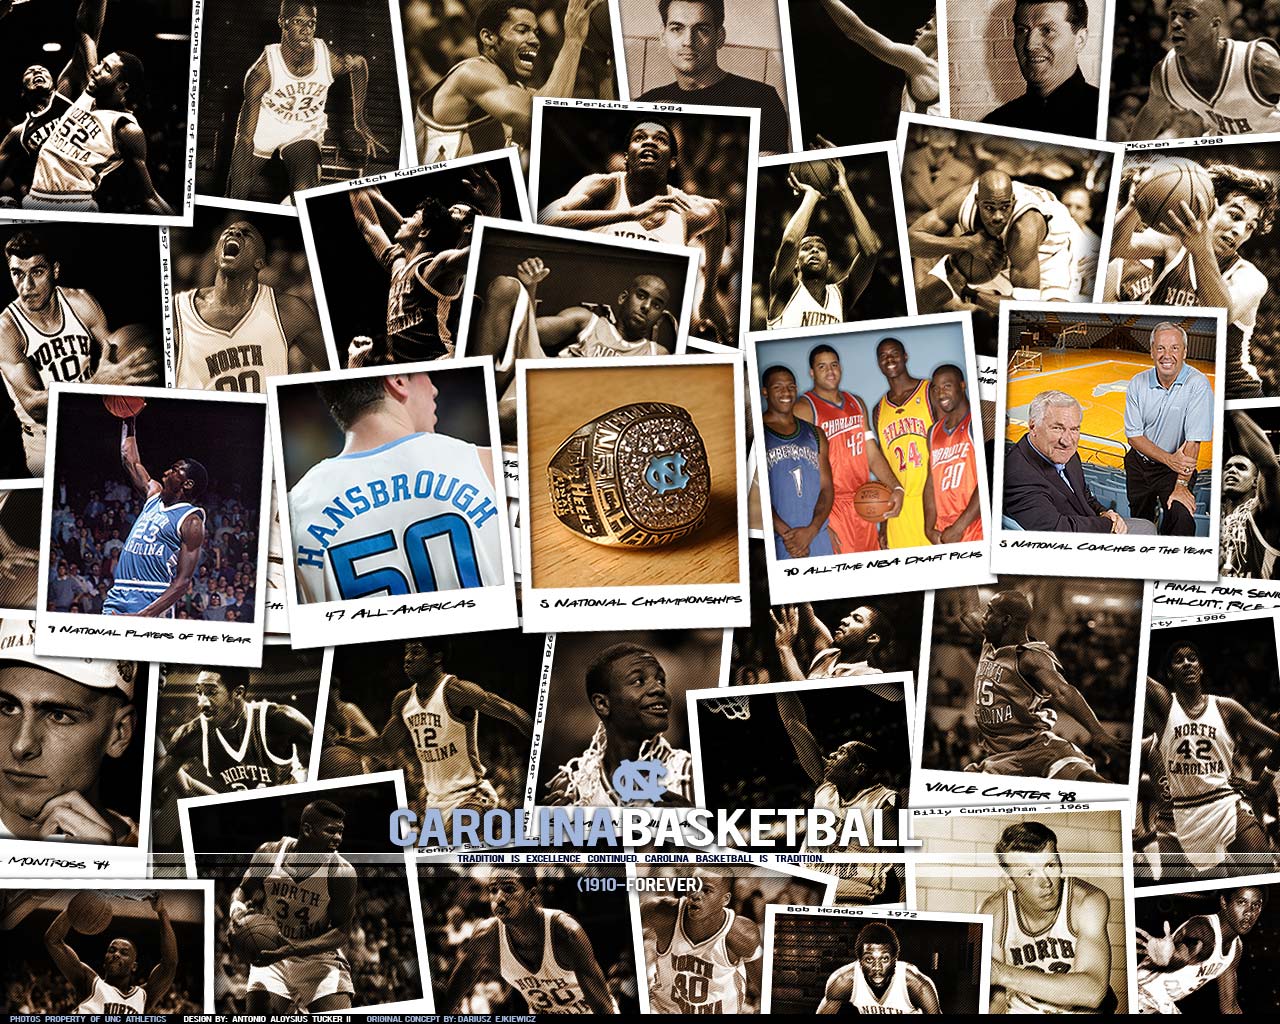 UNC Tar Heel Basketball background wallpaper for desktop 1280x1024